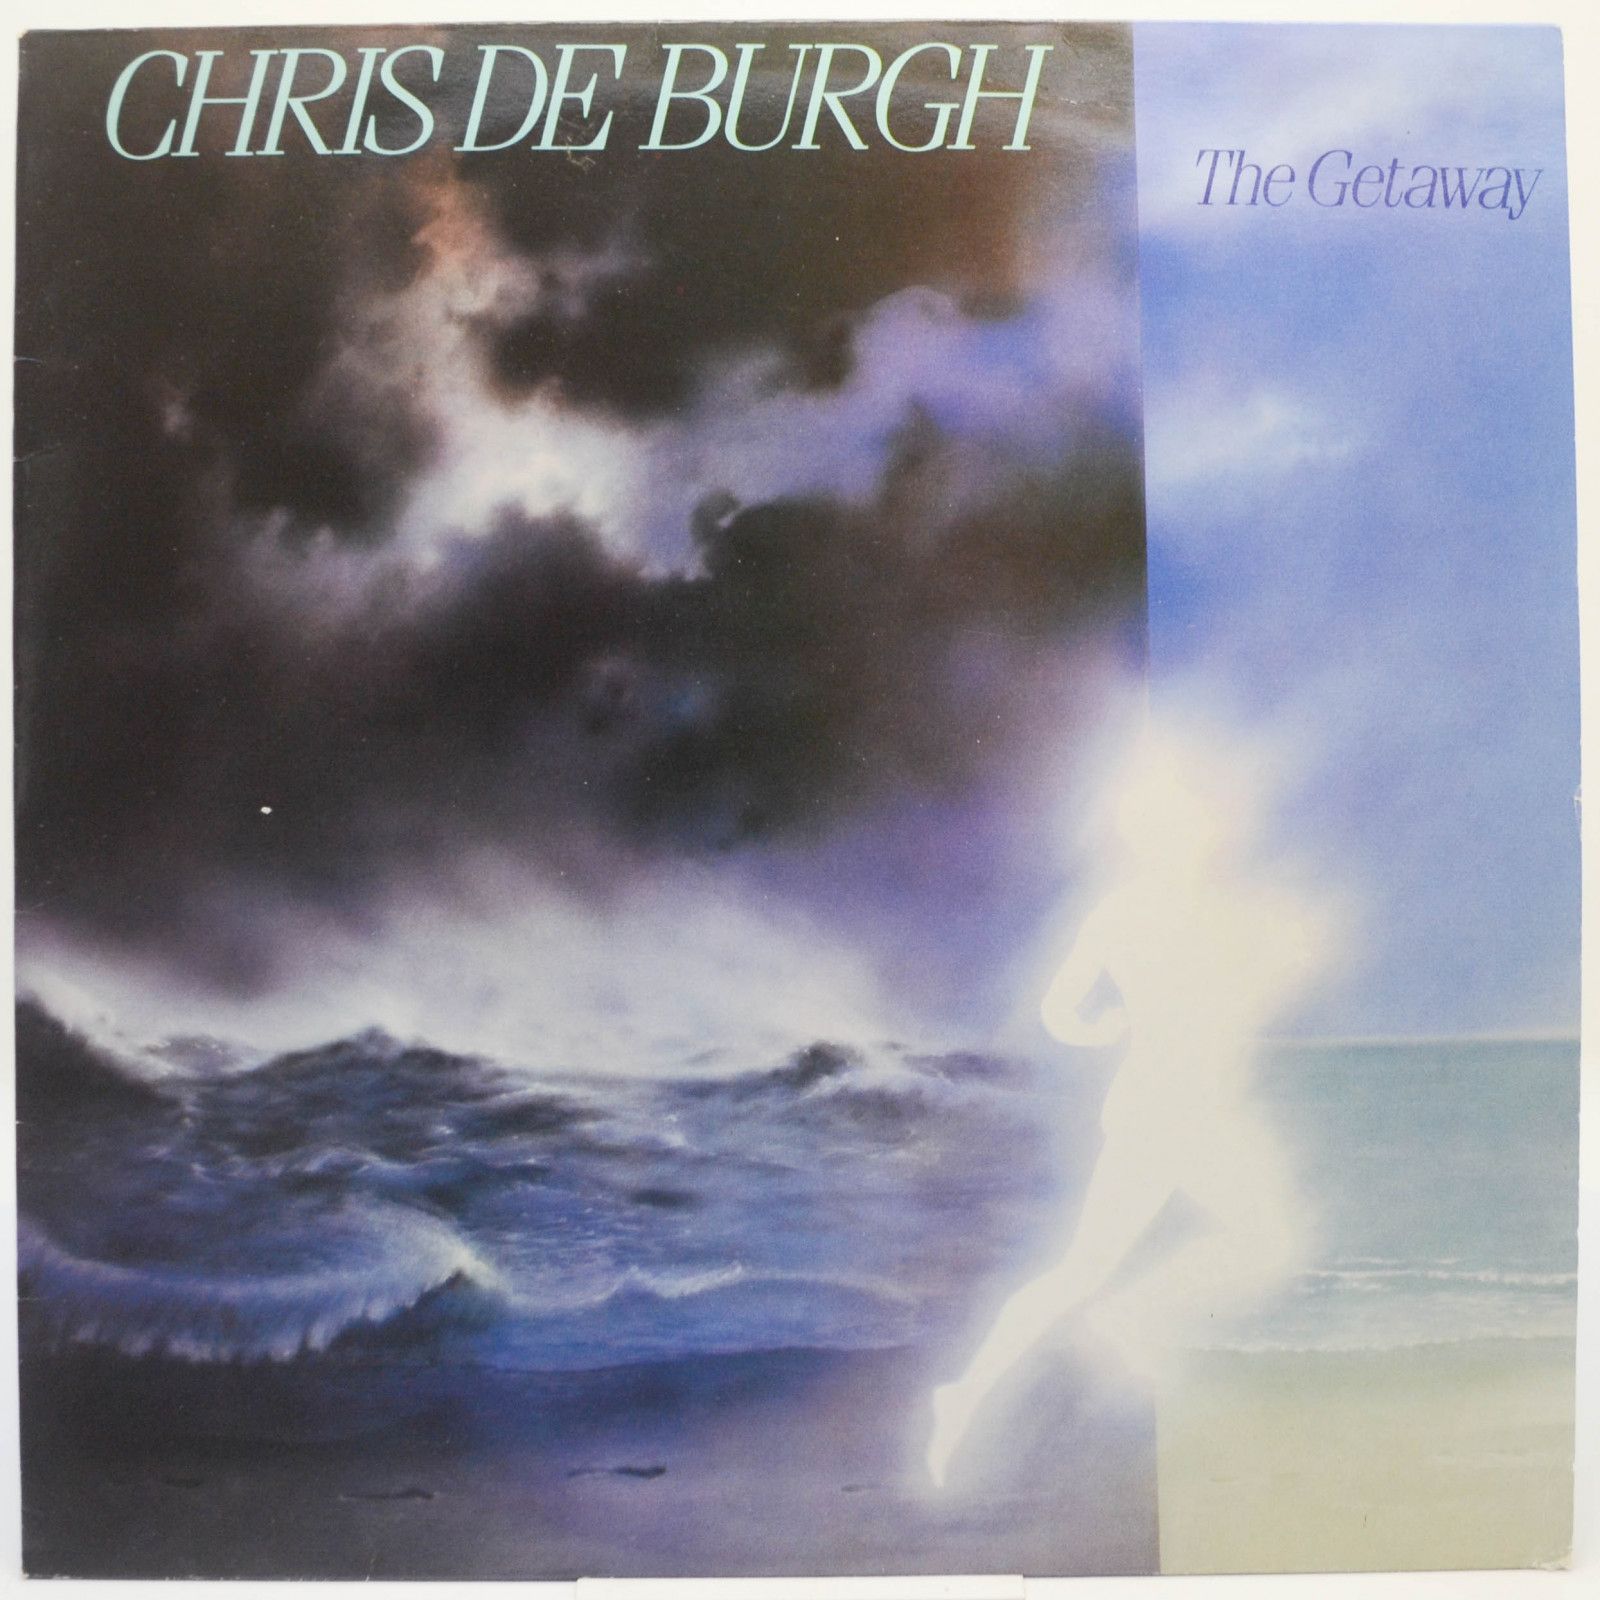 Chris de Burgh — The Getaway, 1982